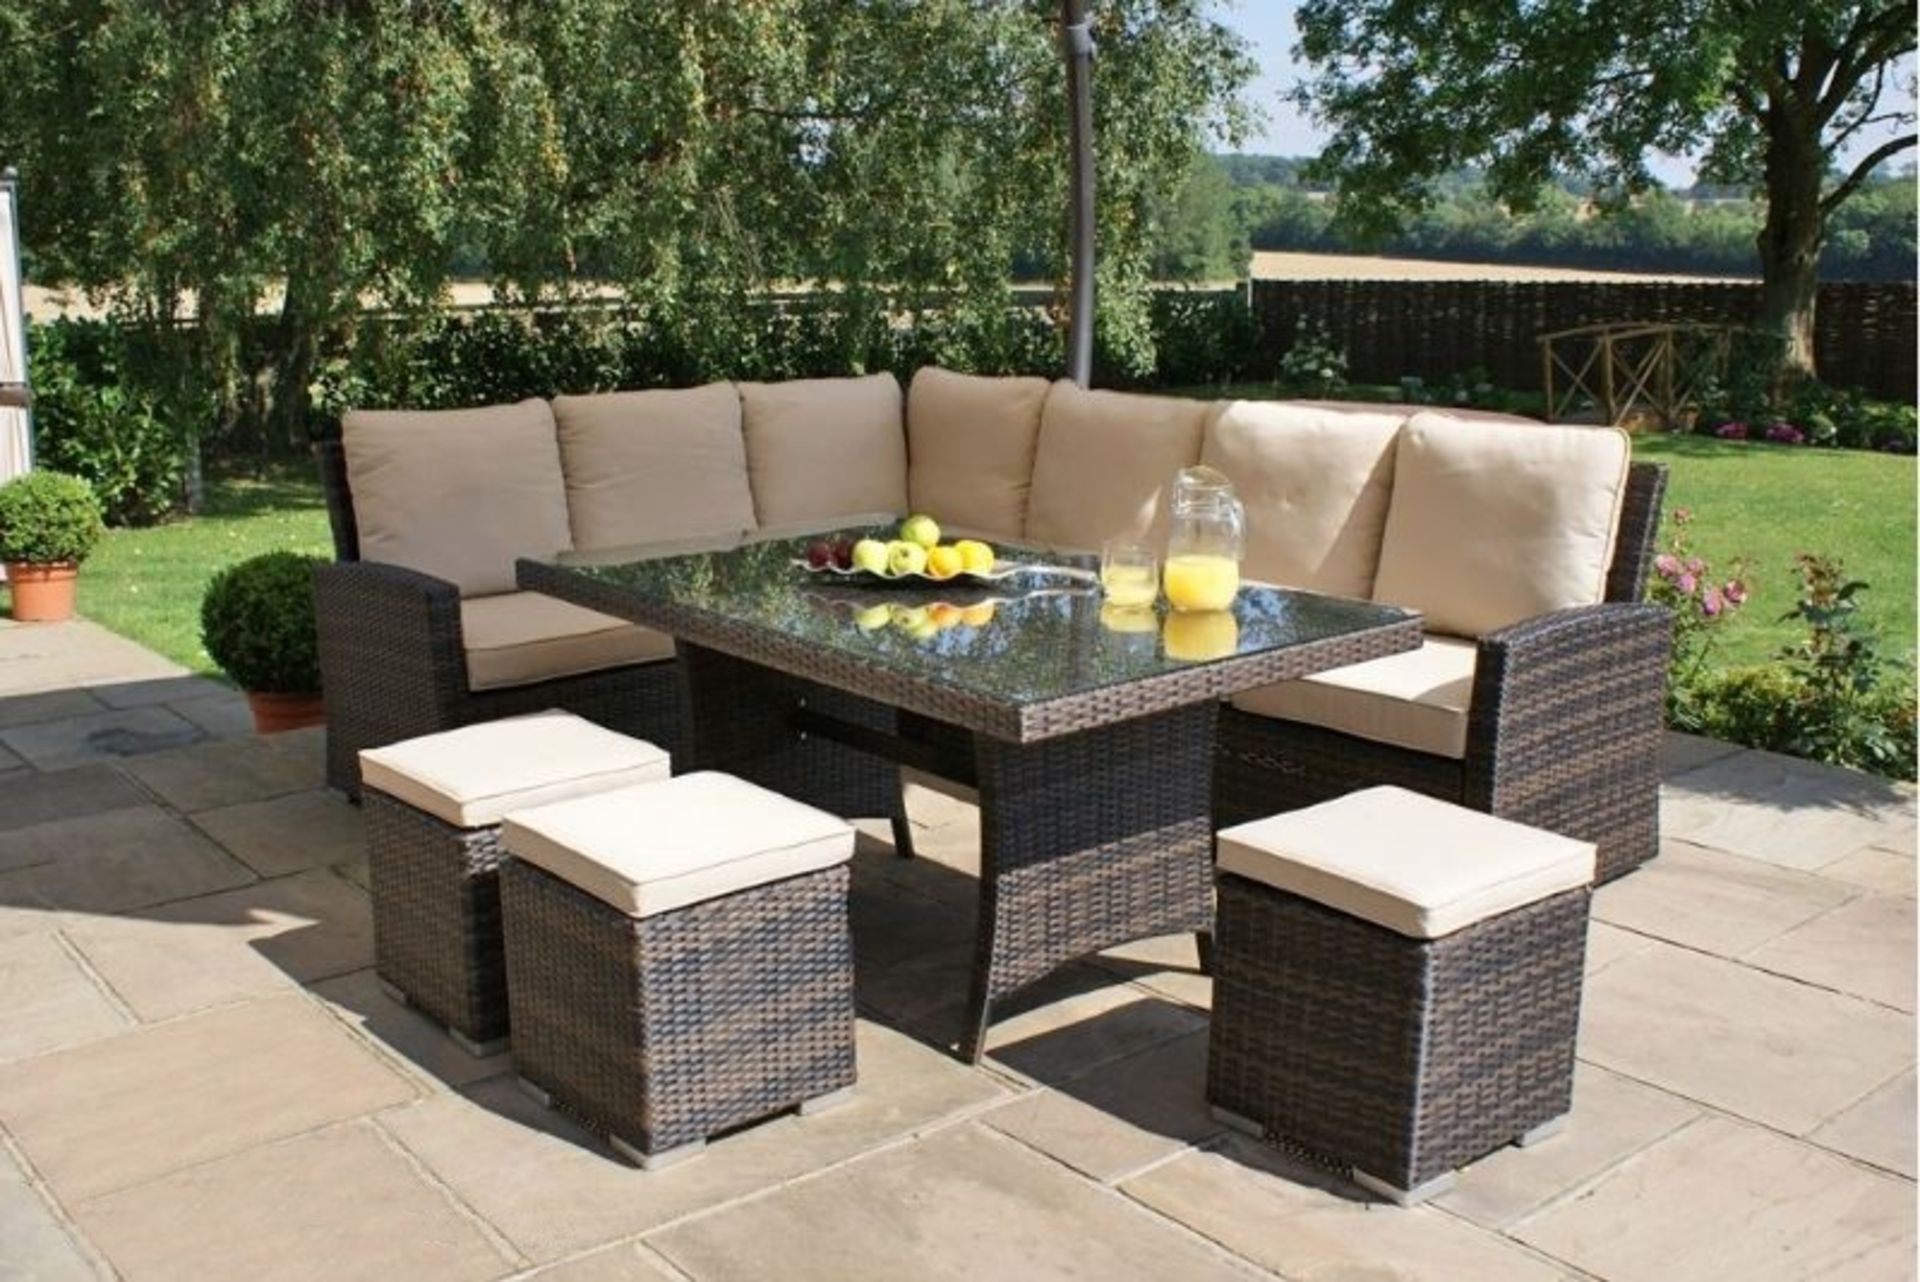 + VAT Brand New Chelsea Garden Company 8-Seater Light Brown Rattan Luxury Corner Outdoor Dining Set - Image 3 of 3